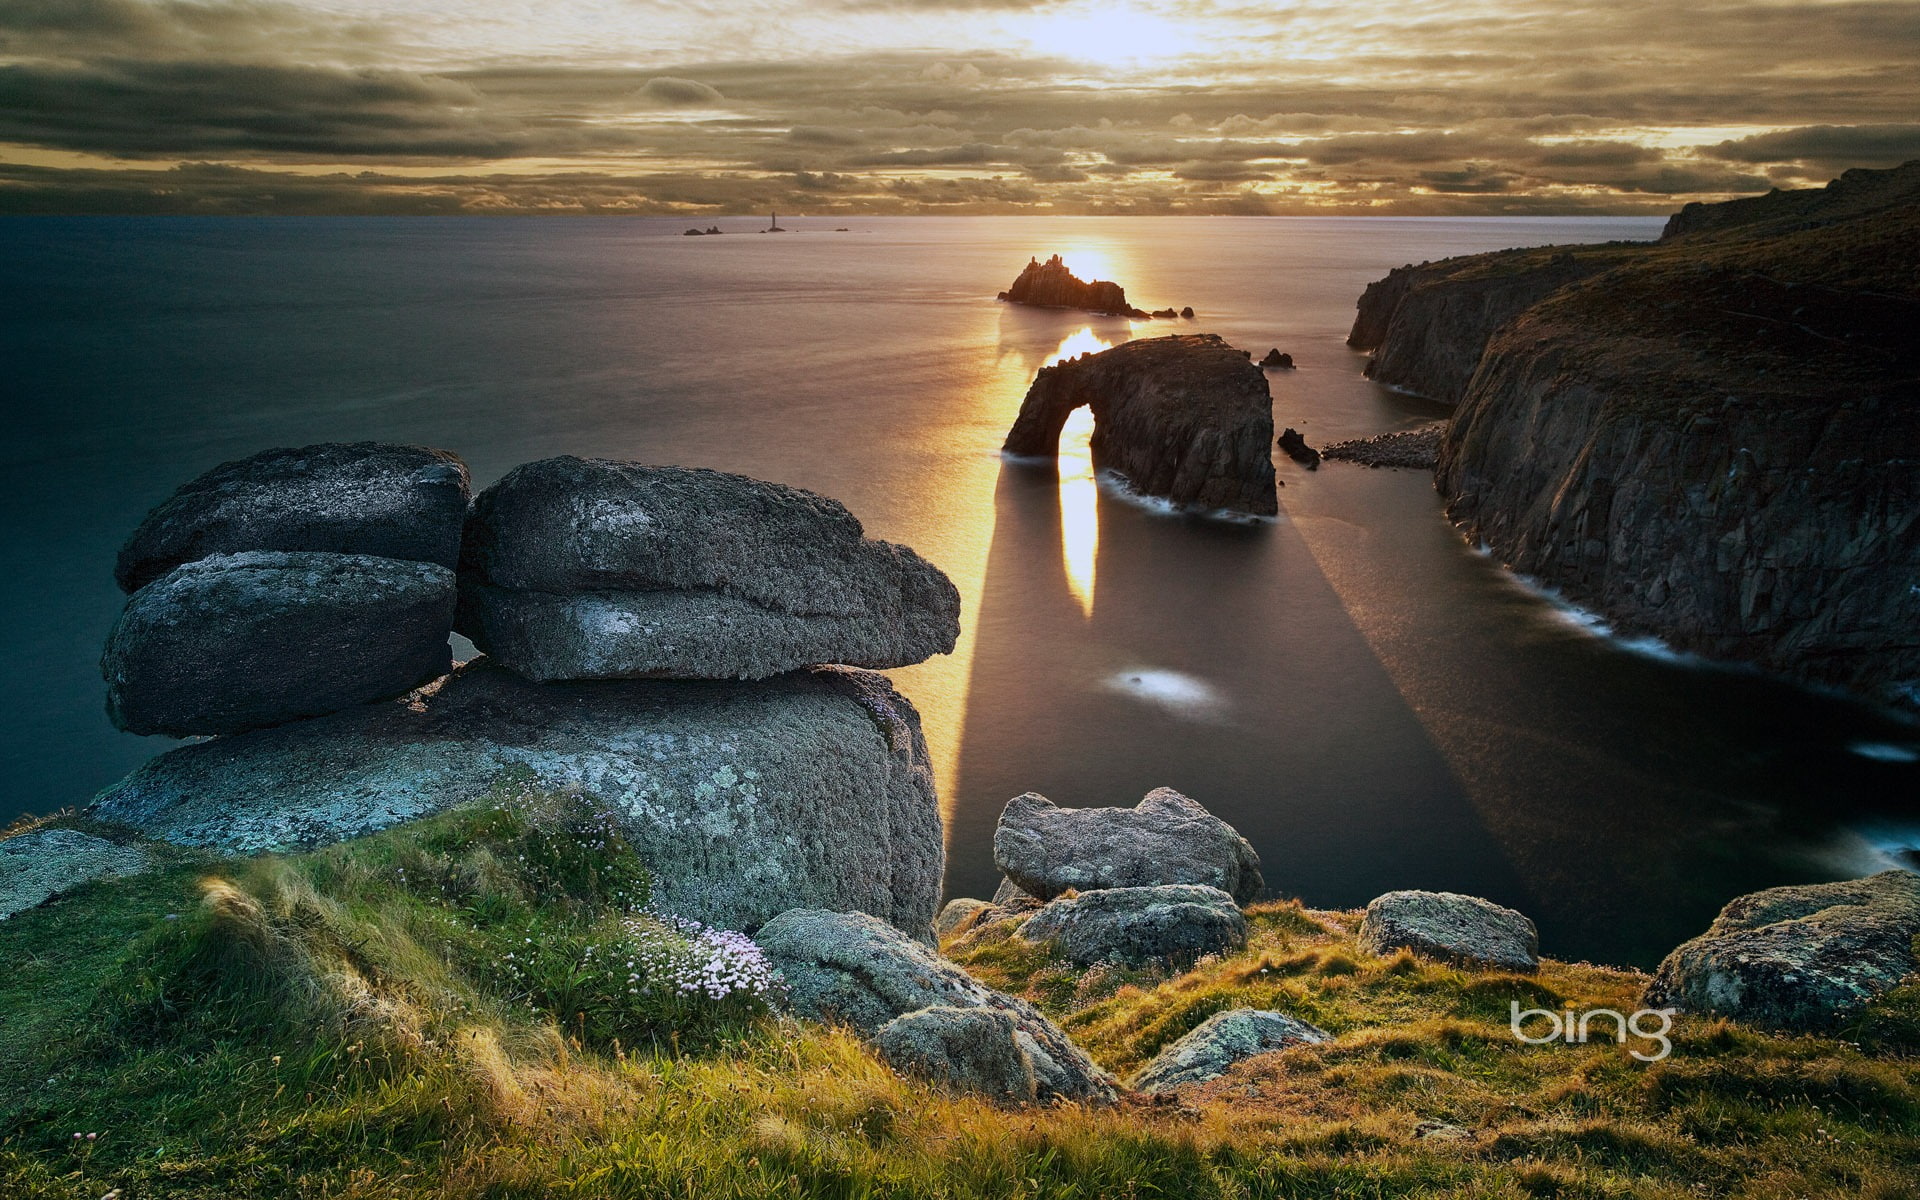 Land End in Cornwall England-2016 Bing Desktop Wal.., gray rock formation